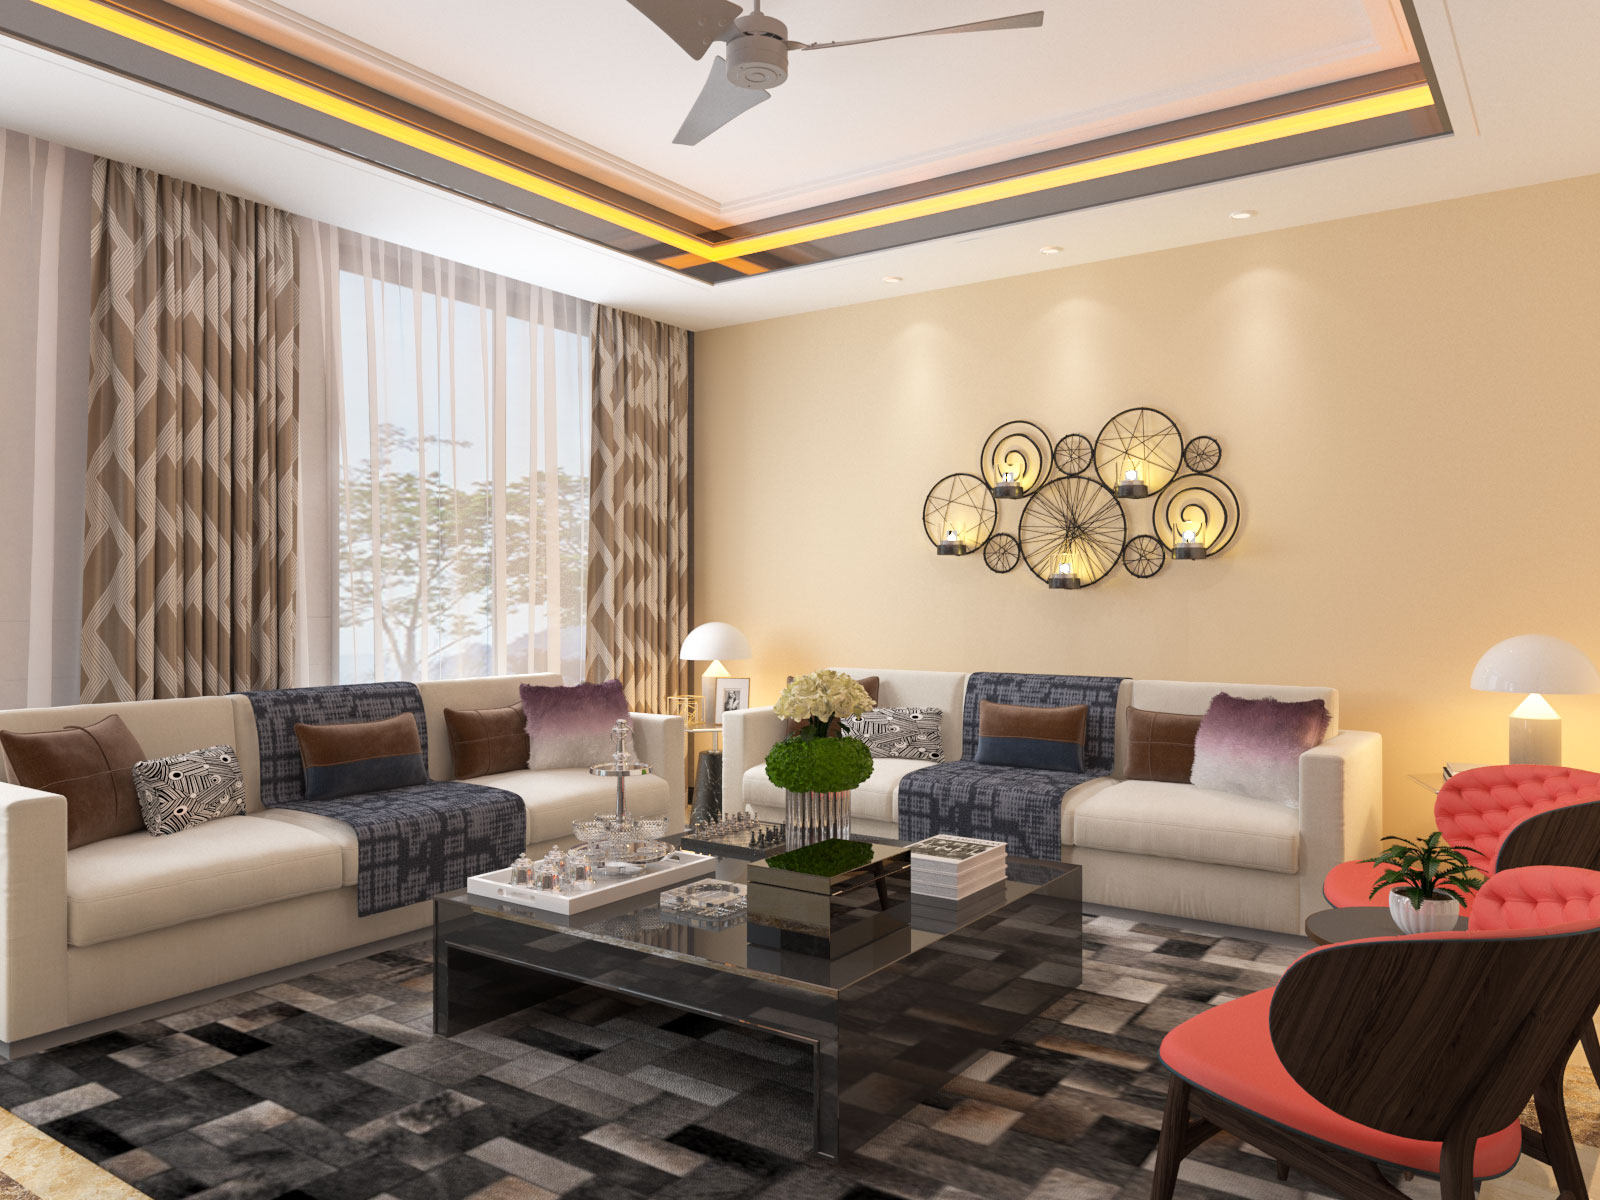 Indian Homes – Design Ideas for Living room, bedroom, kitchen & more.